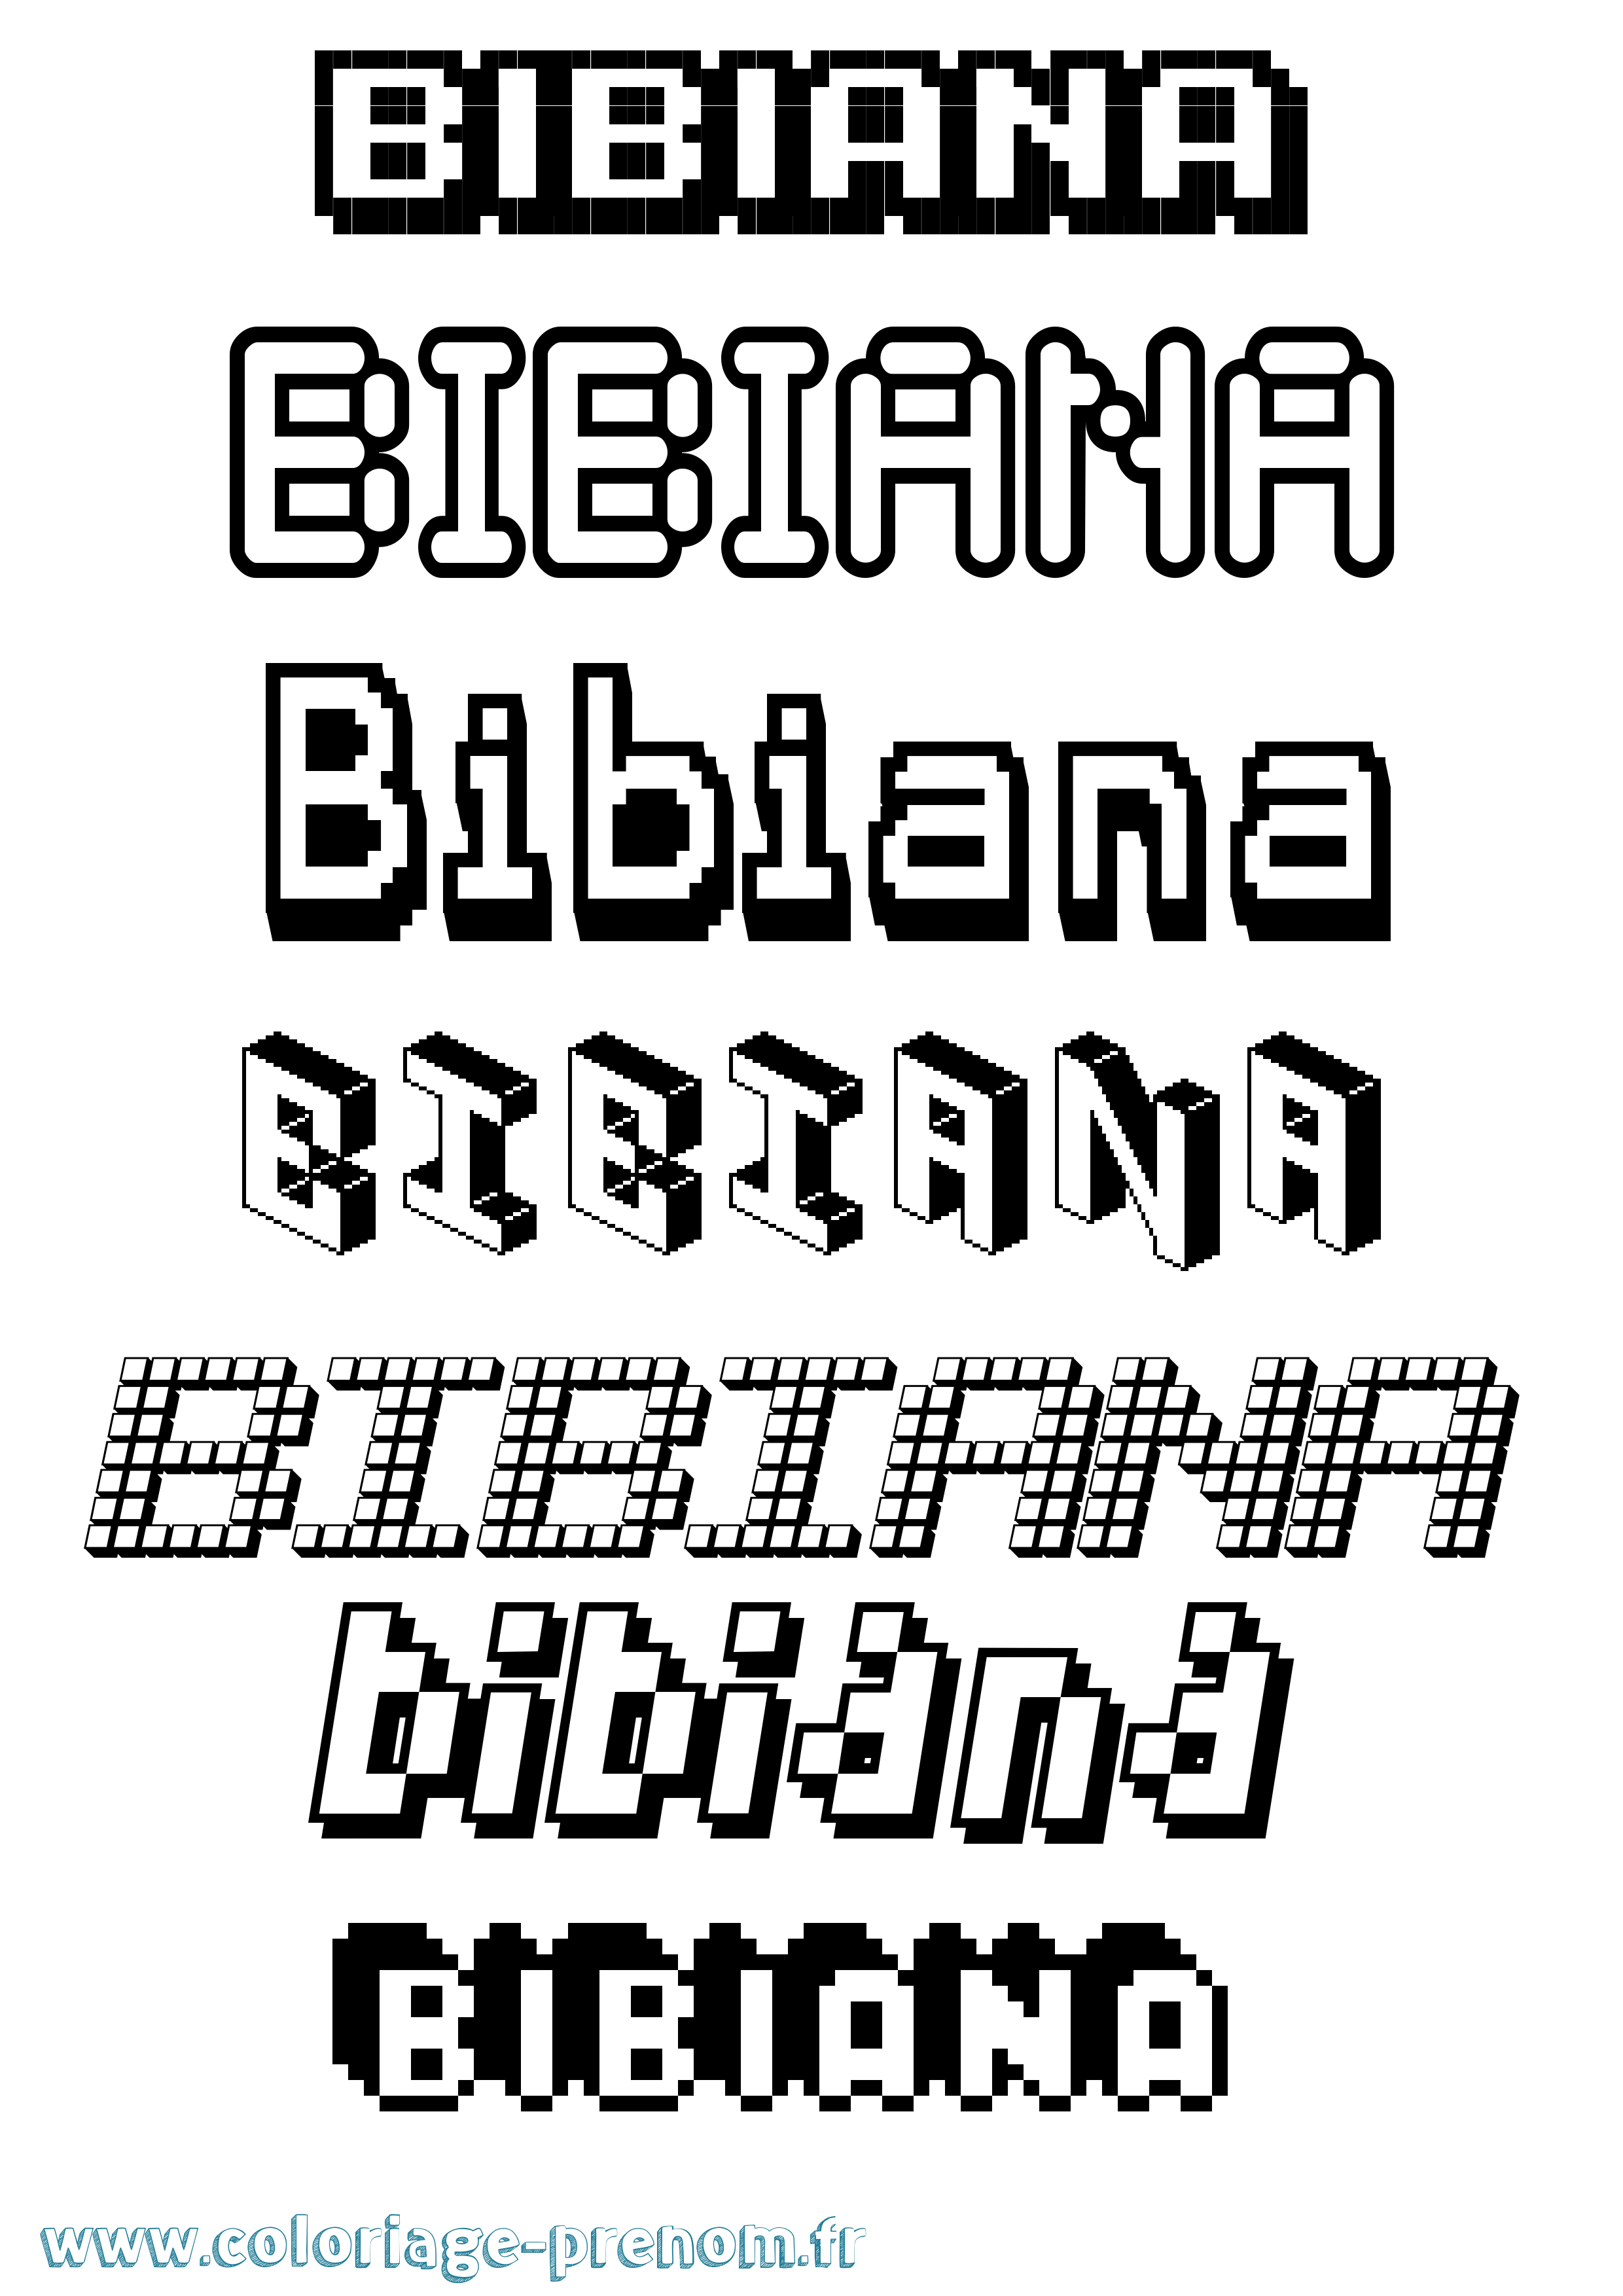 Coloriage prénom Bibiana Pixel